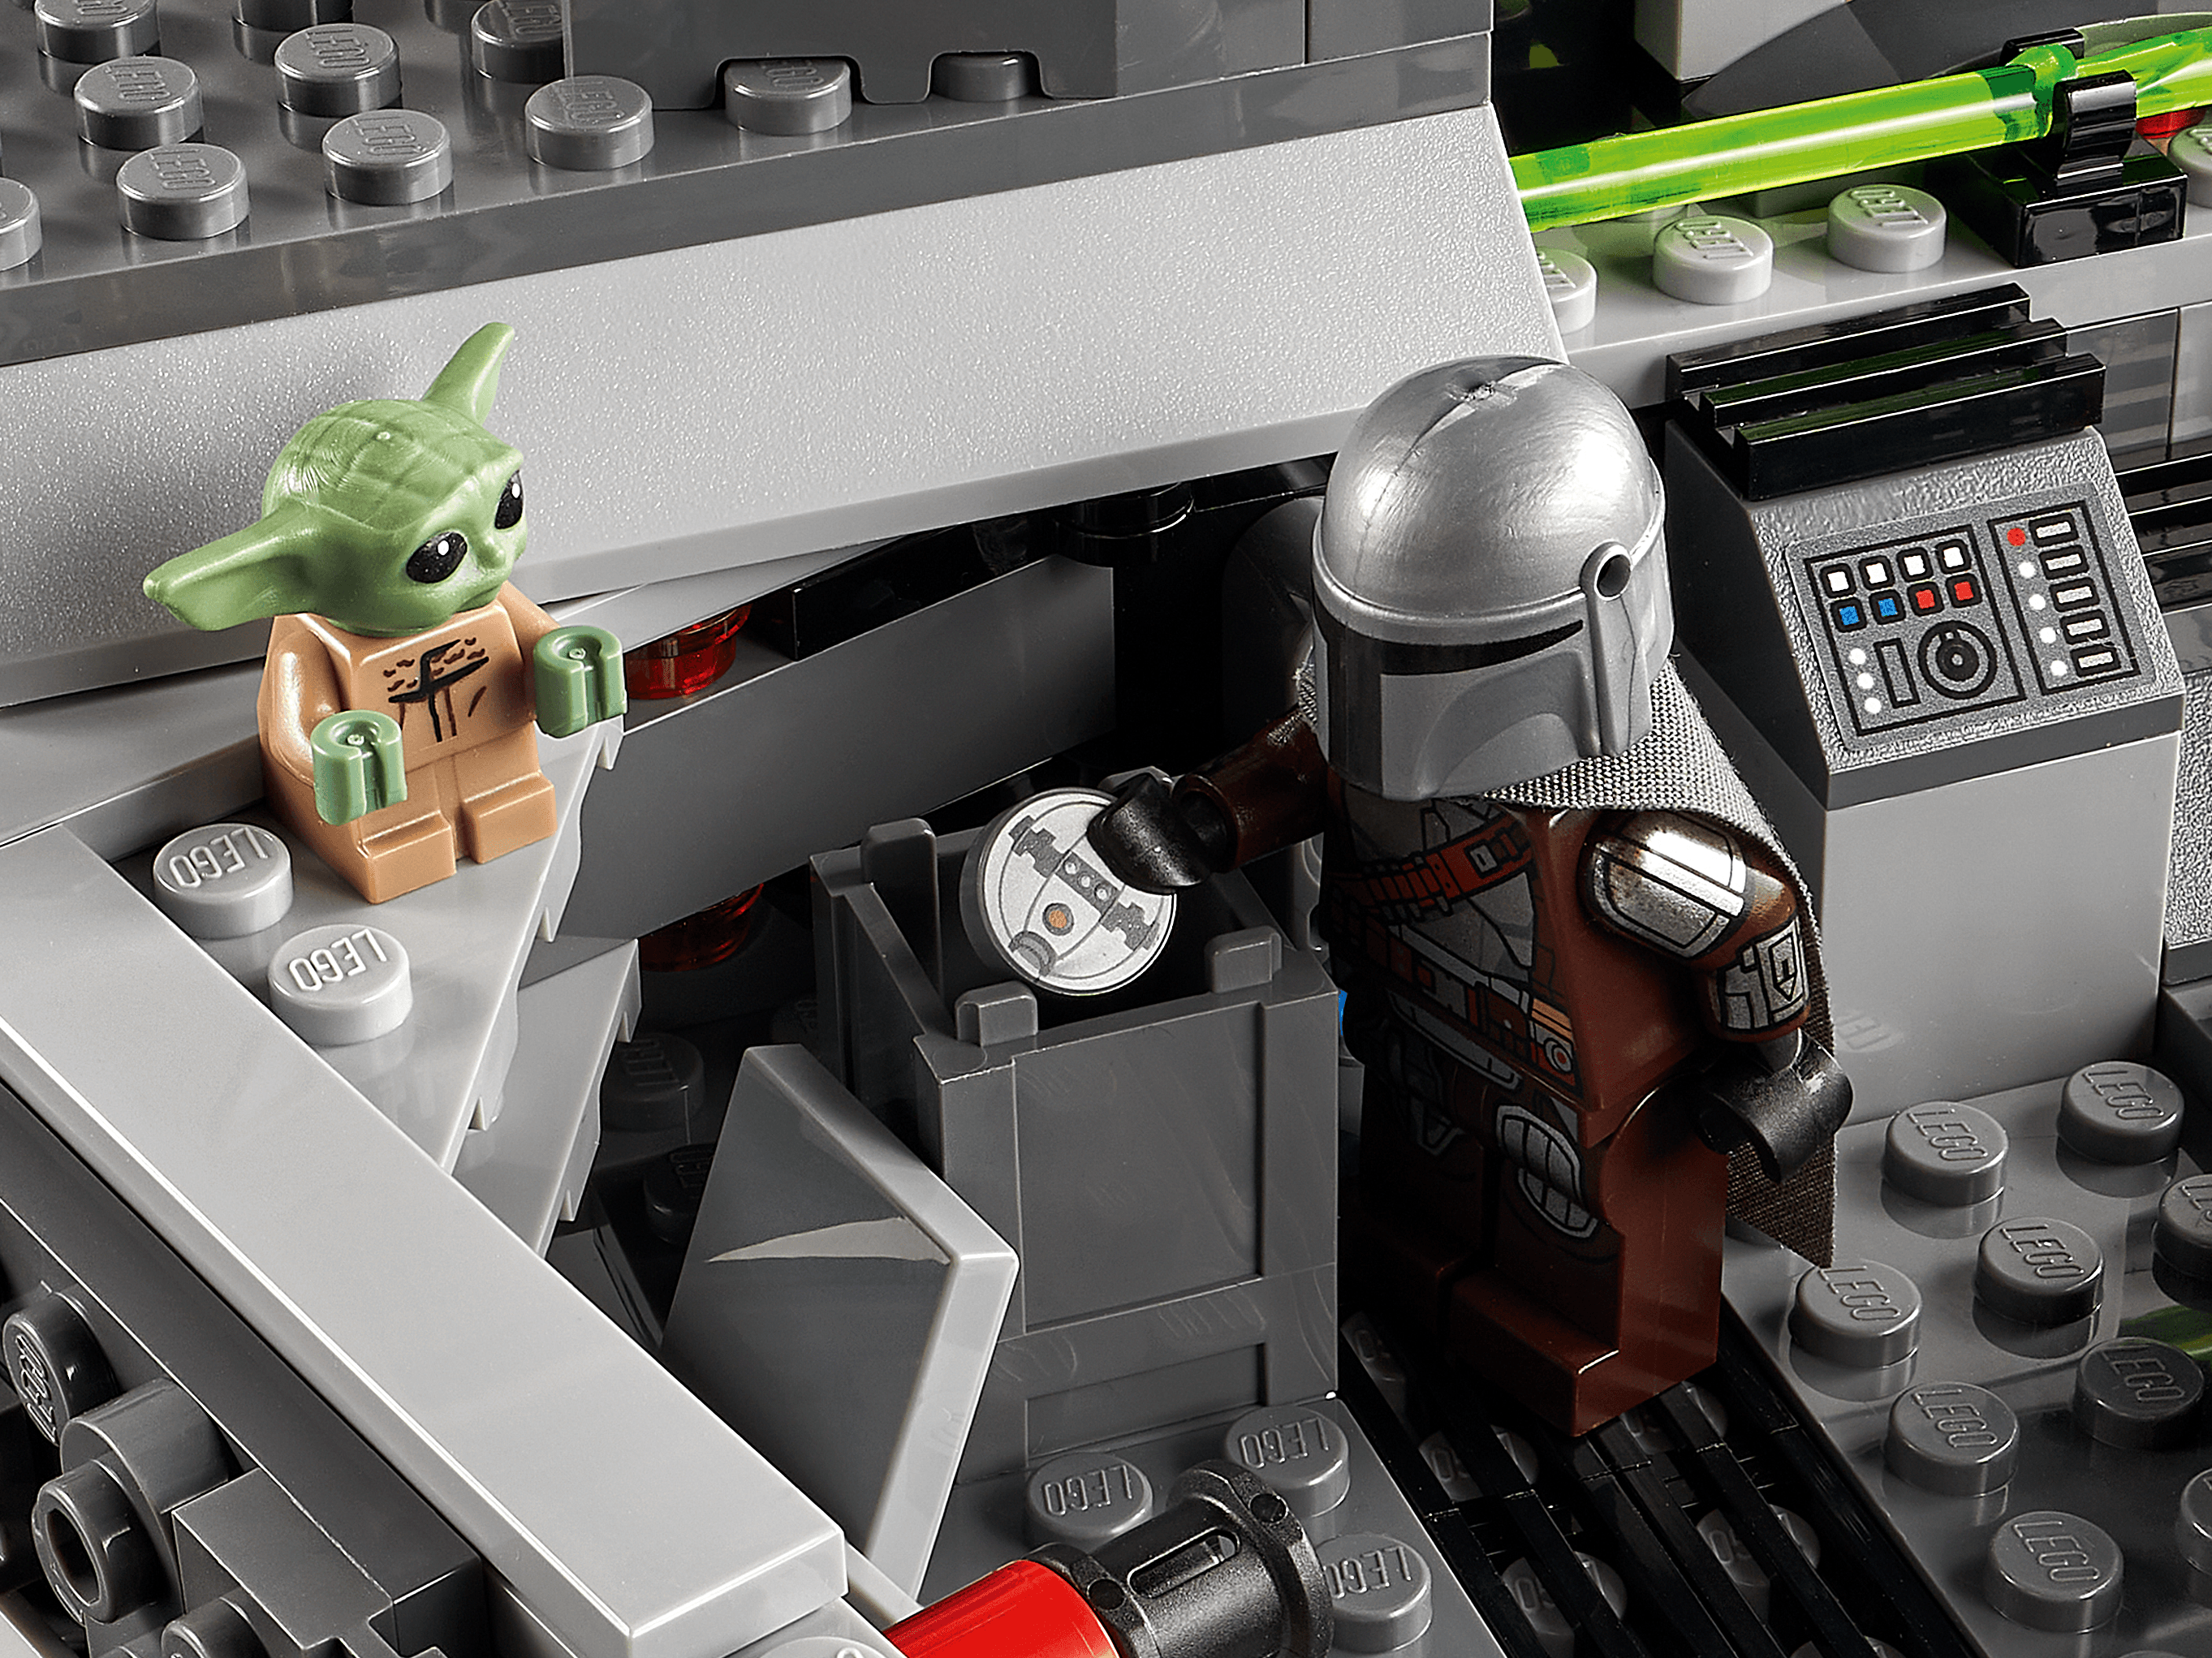 ▻ Très vite testé : LEGO Star Wars 75315 Imperial Light Cruiser - HOTH  BRICKS